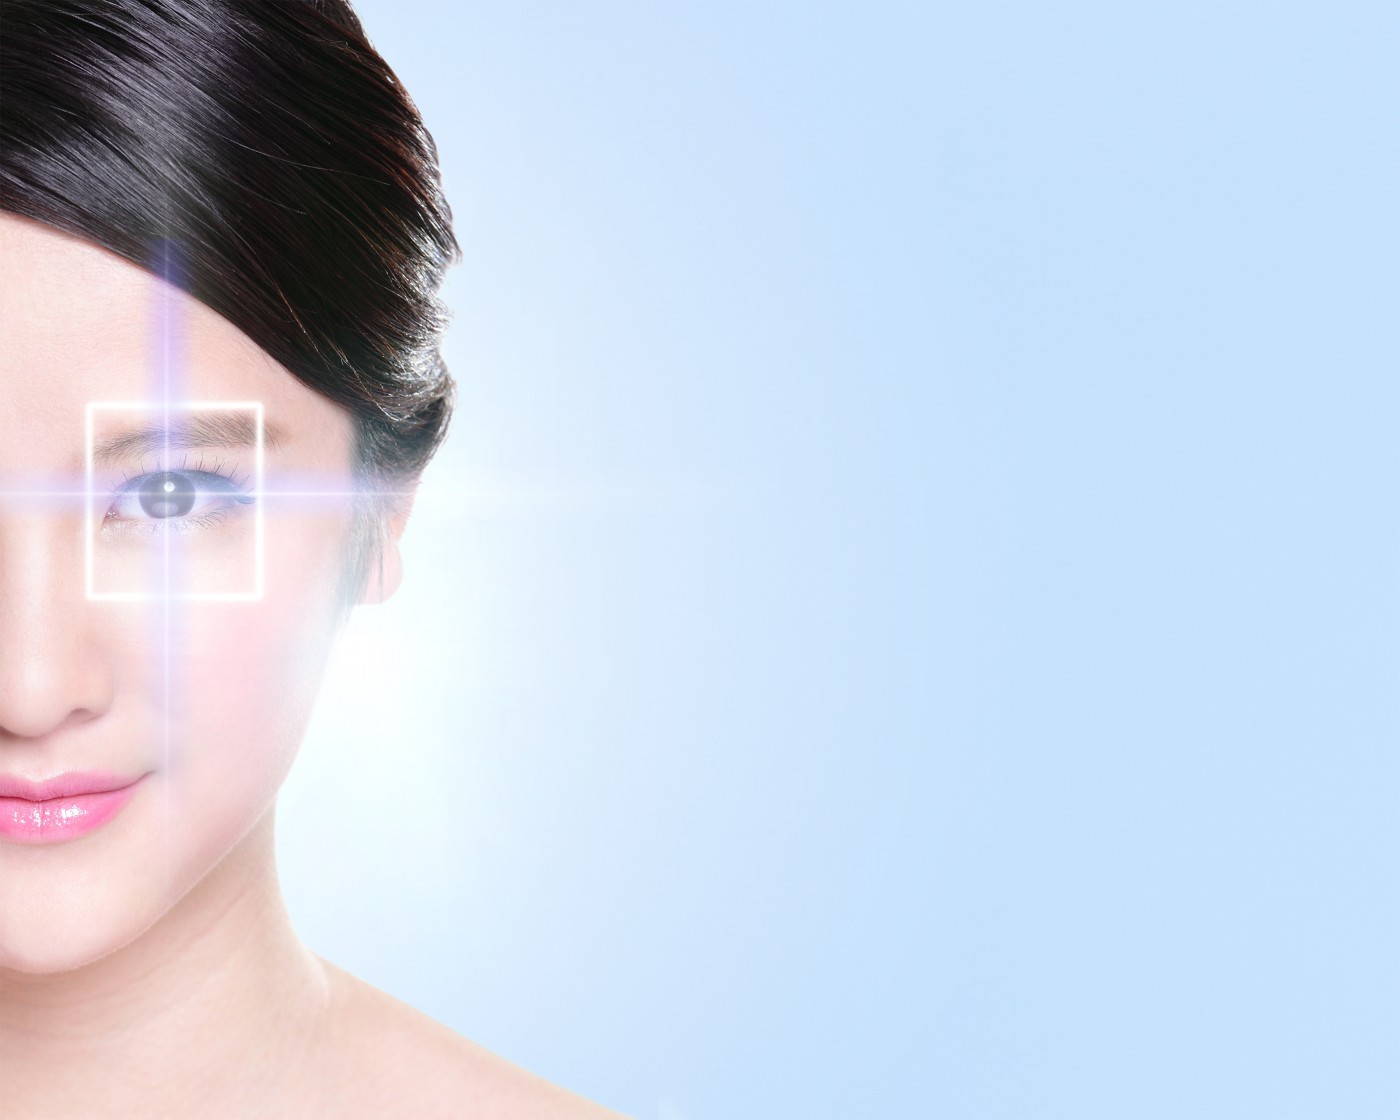 Femtosecond Laser Cataract Surgery Improves Postoperative Visual Acuity